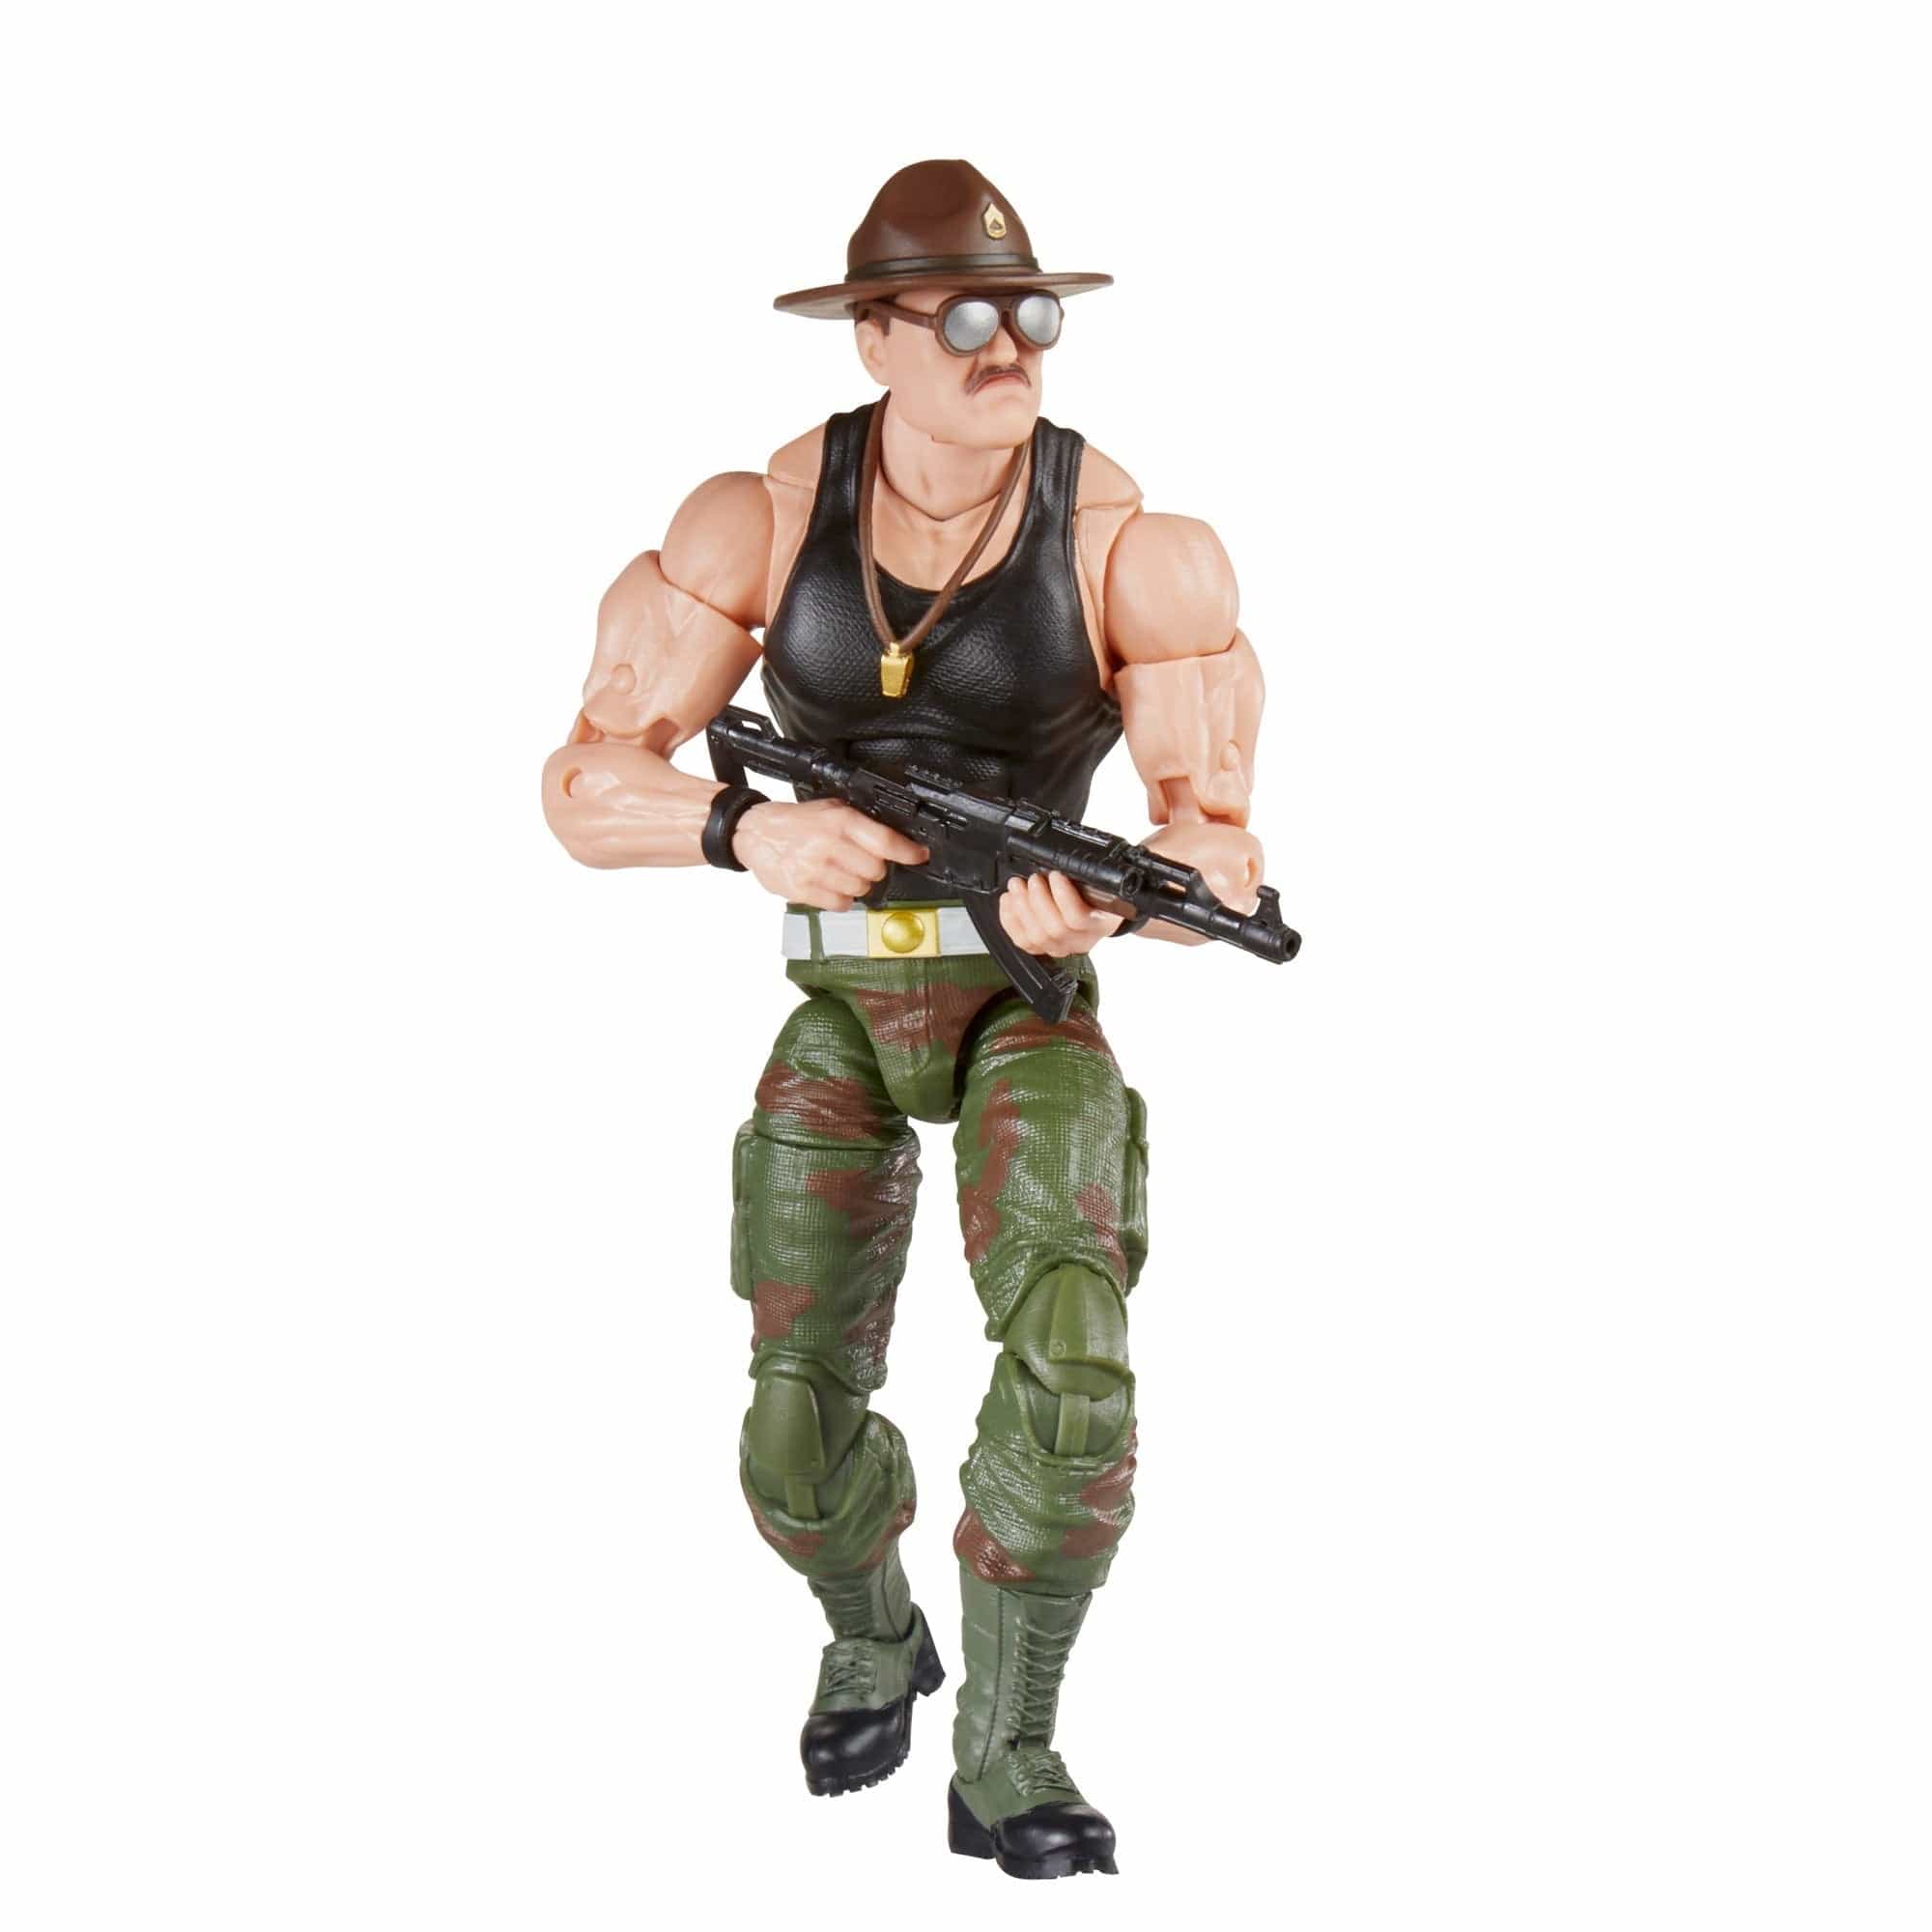 Hasbro G.I. Joe Classified Series Sgt. Slaughter Action Figure